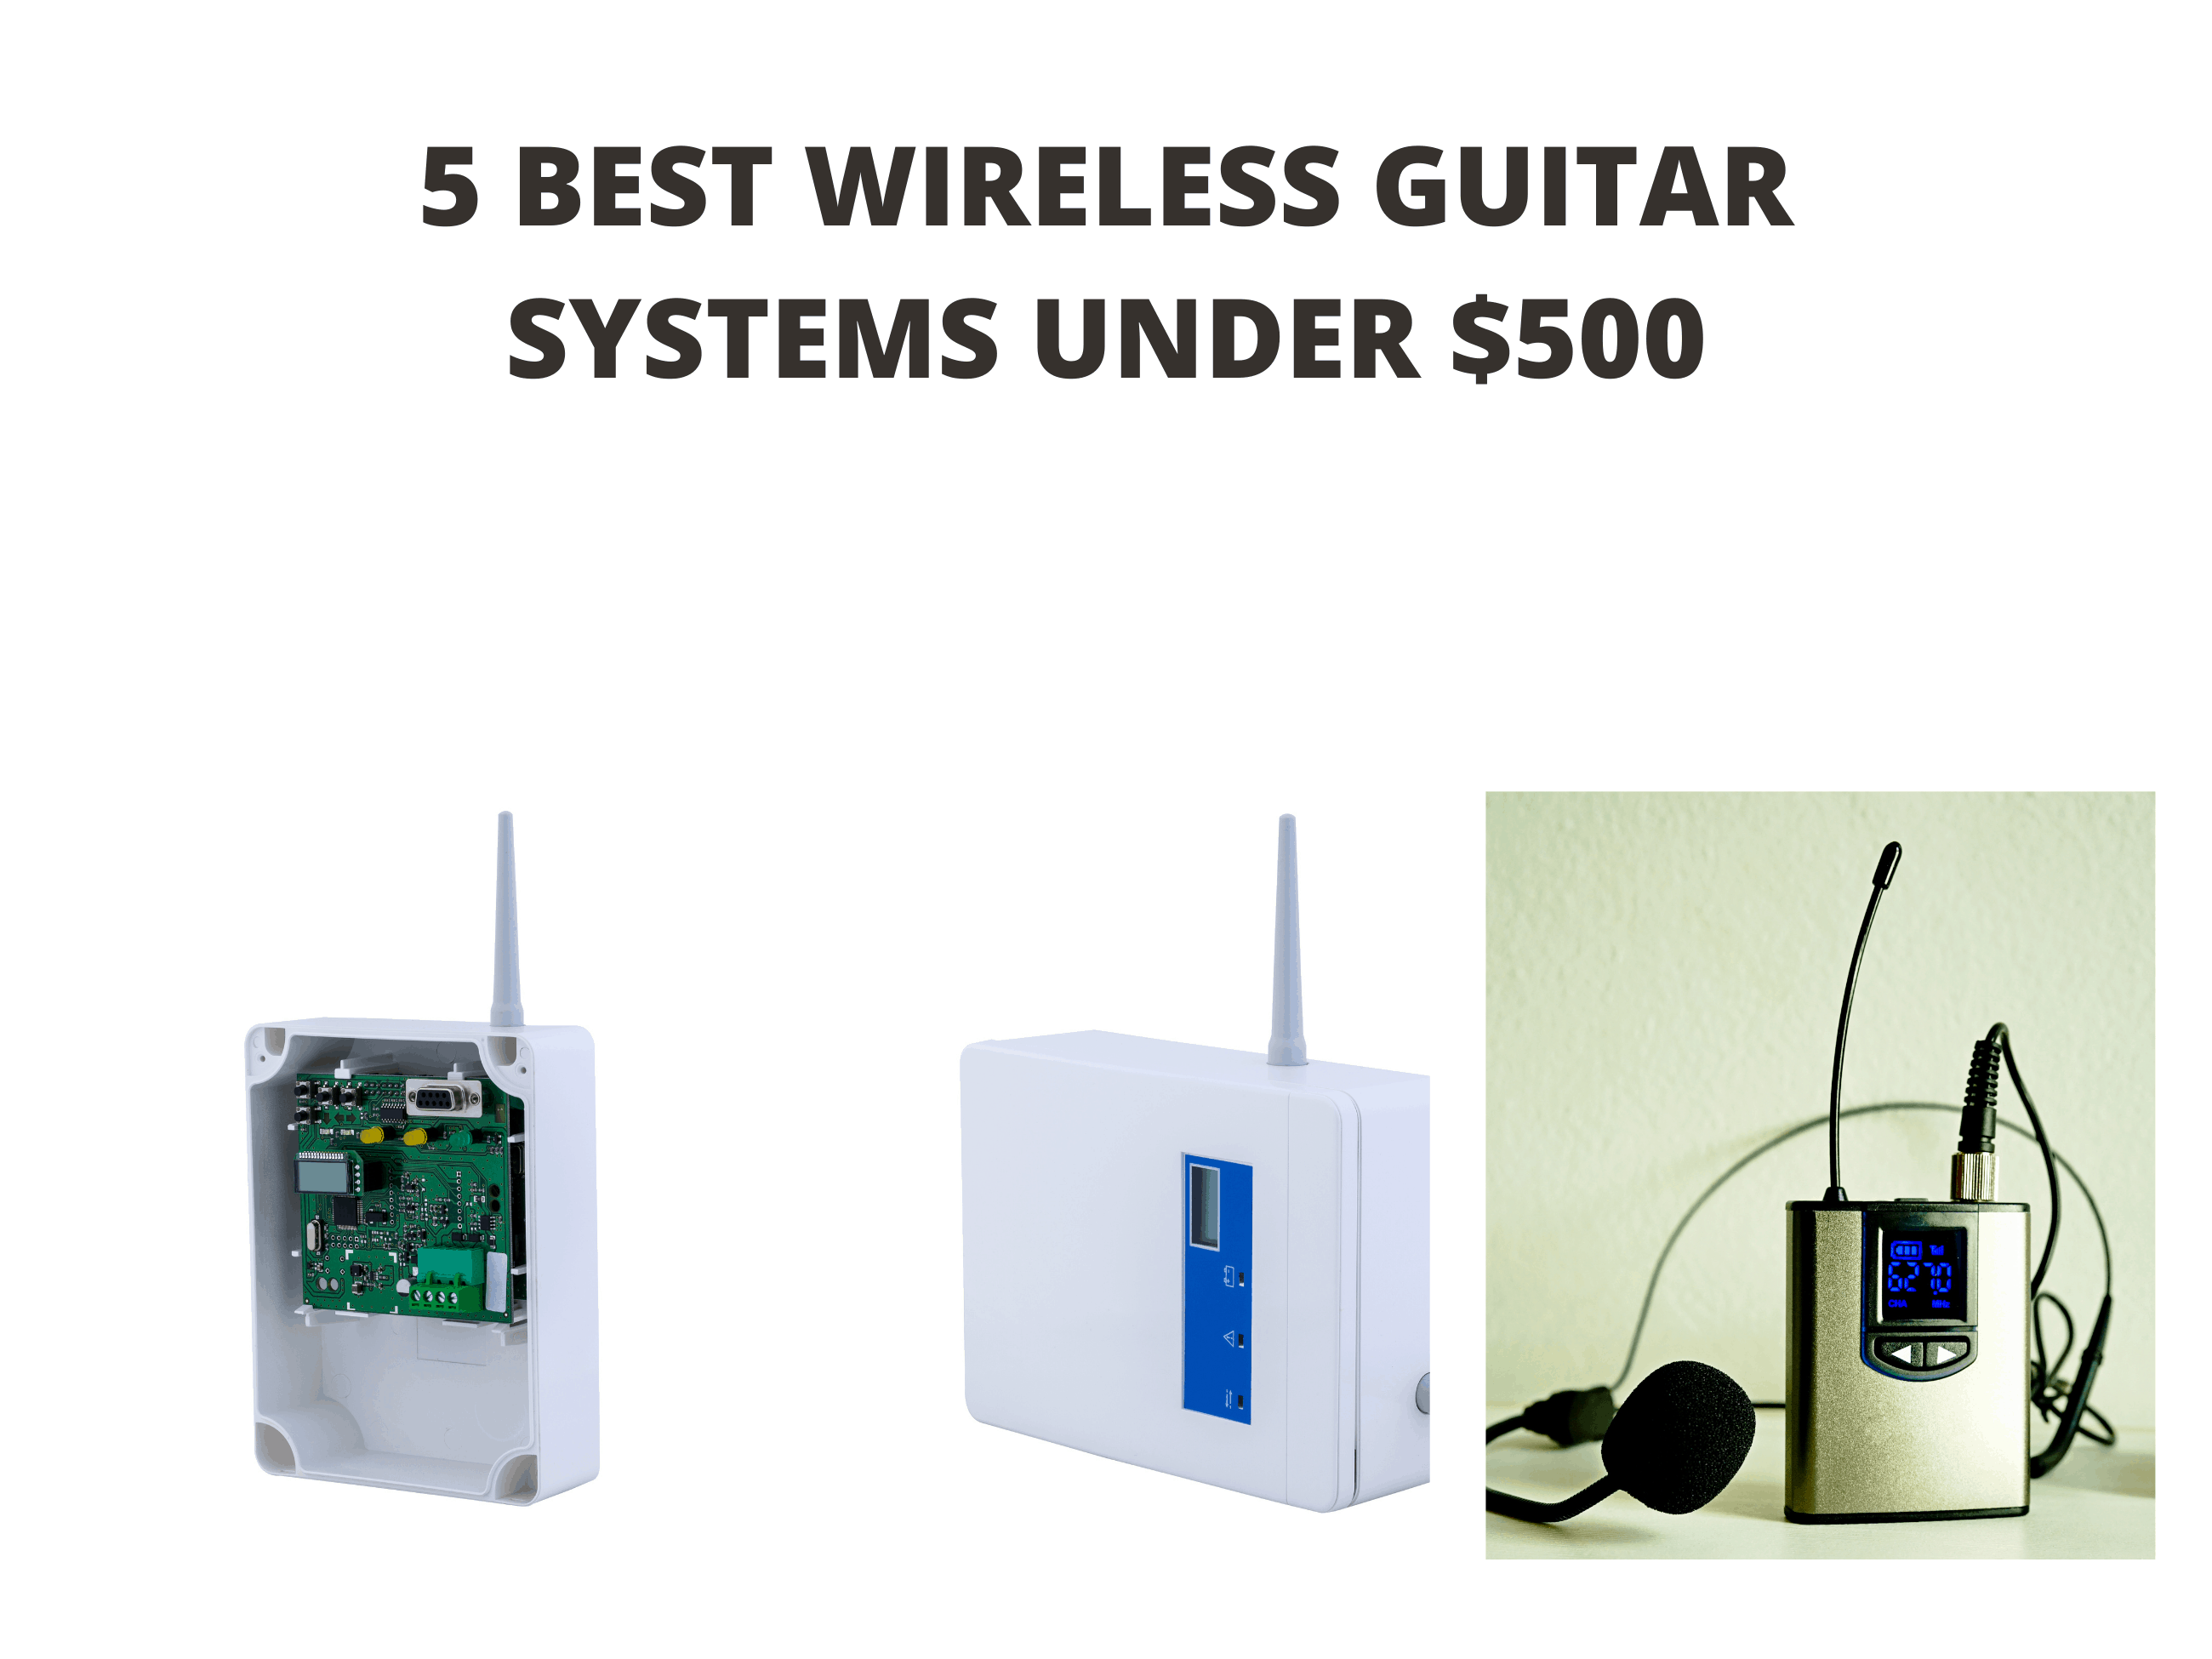 5 Best Wireless Guitar Systems under $500 (2021 Reviews)